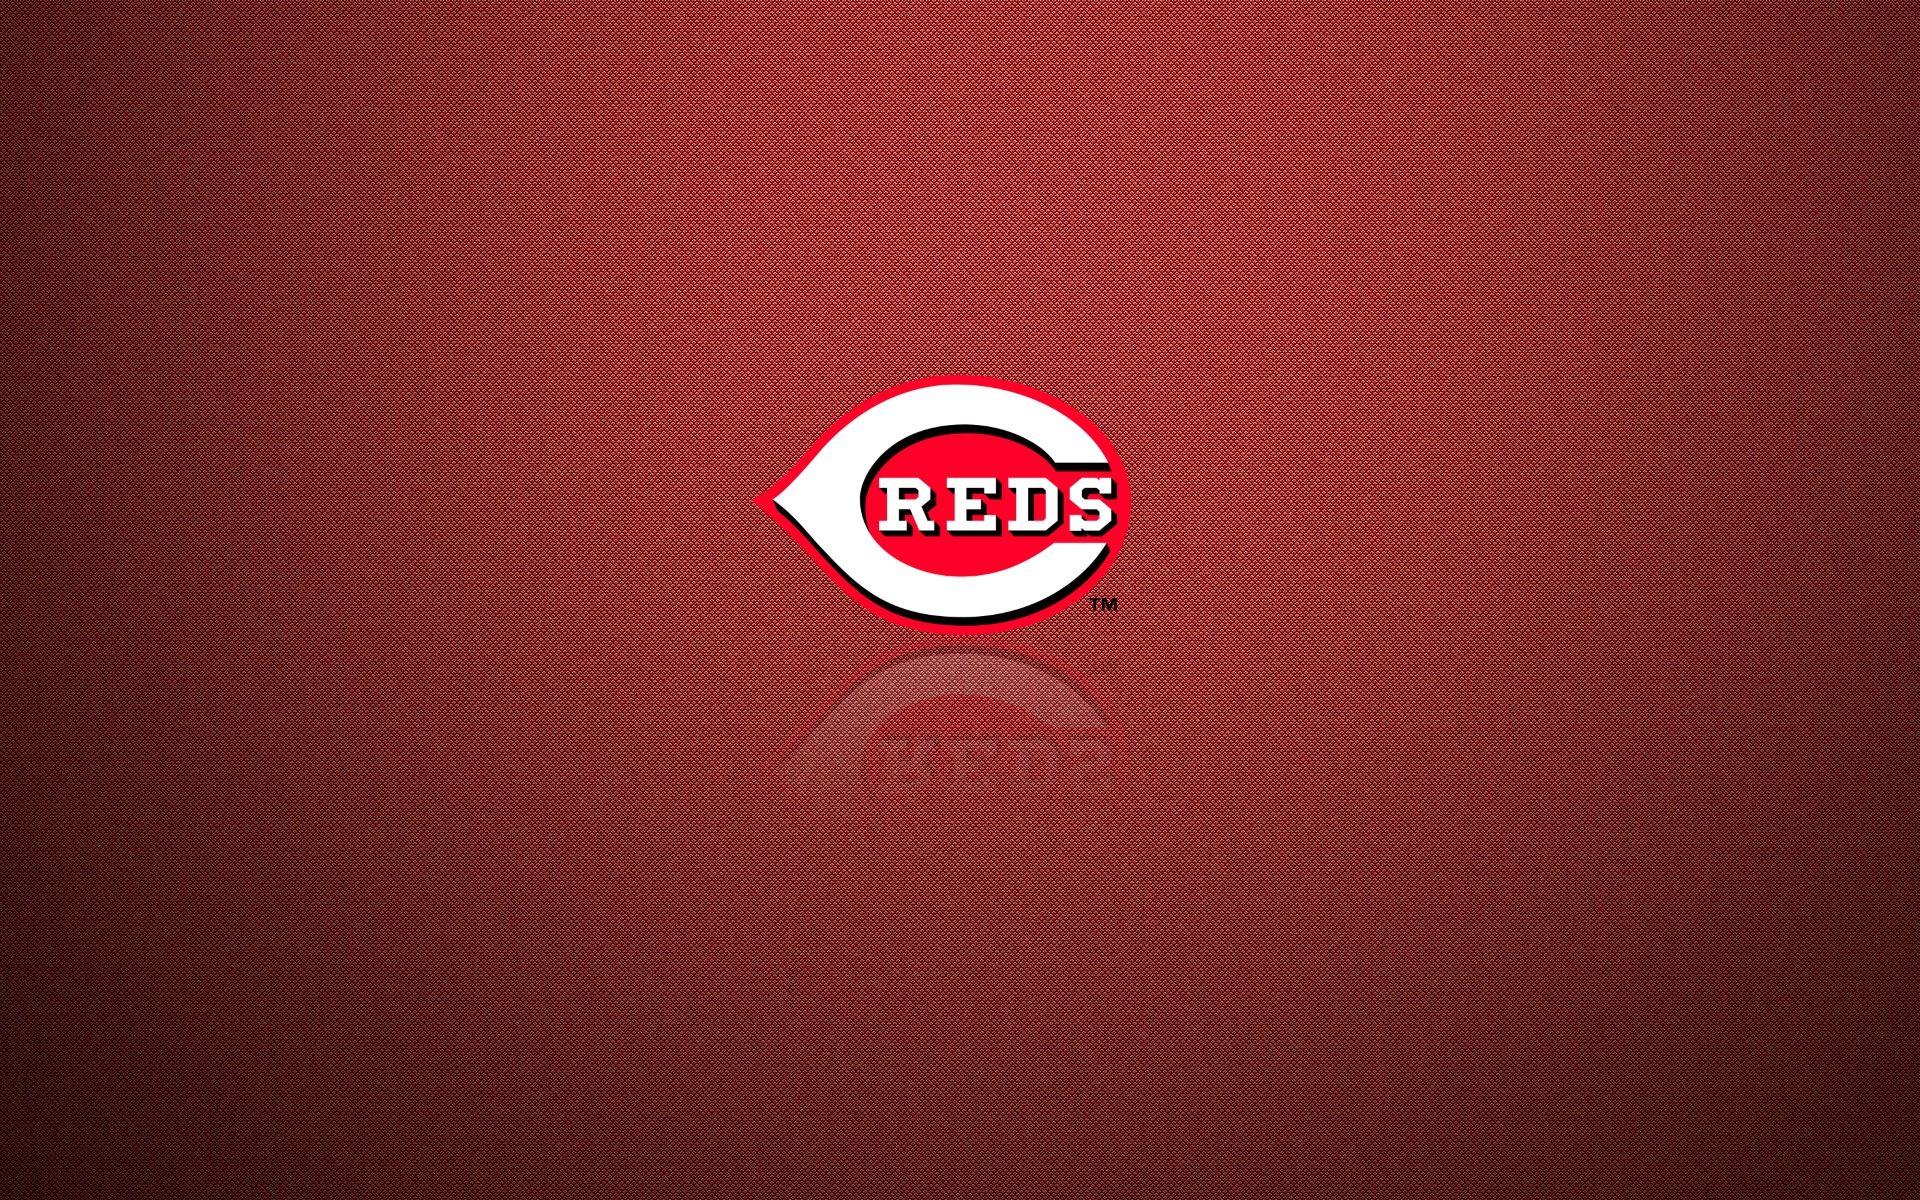 Wallpaper.wiki HD Cincinnati Reds Image PIC WPD0010885